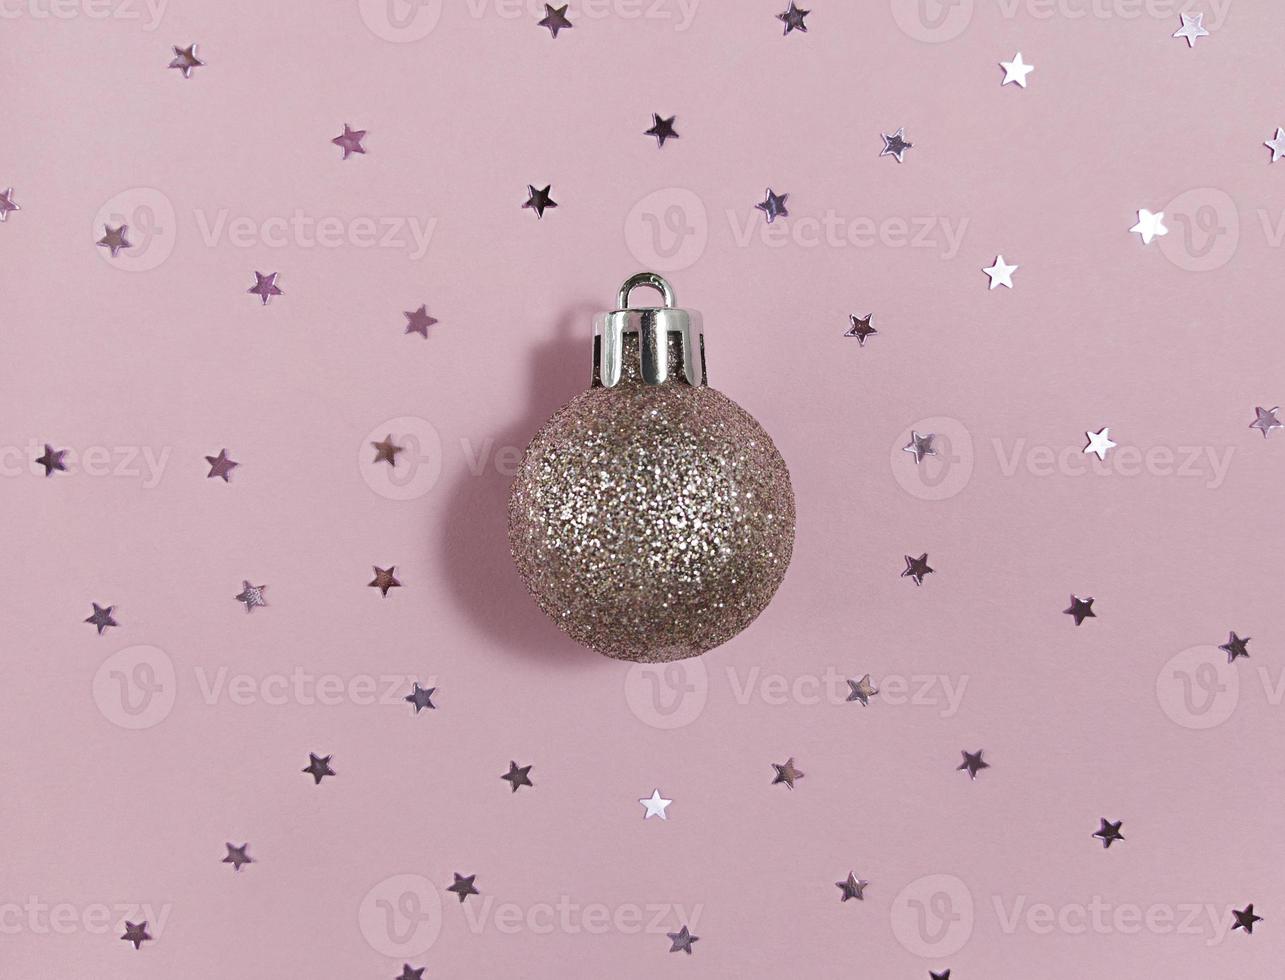 glitter kerstboom bal en confetti sterren op een roze papier. feestelijk plat leggen. foto